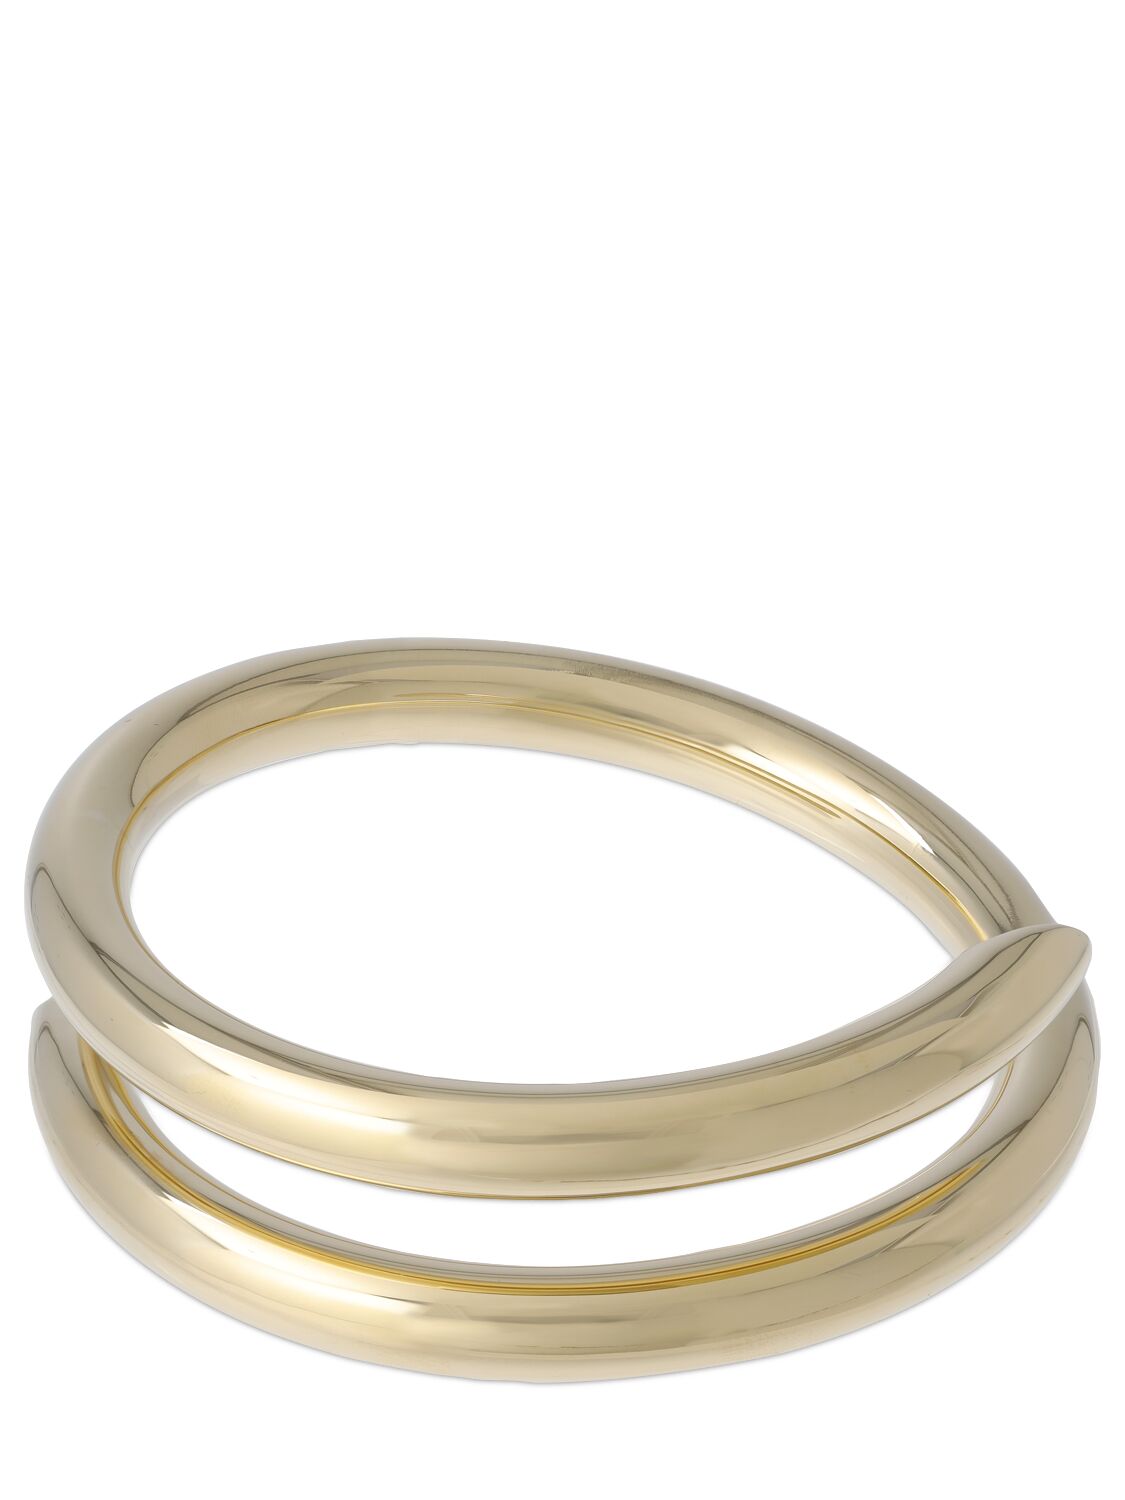 Image of The Single Coil Bangle Bracelet